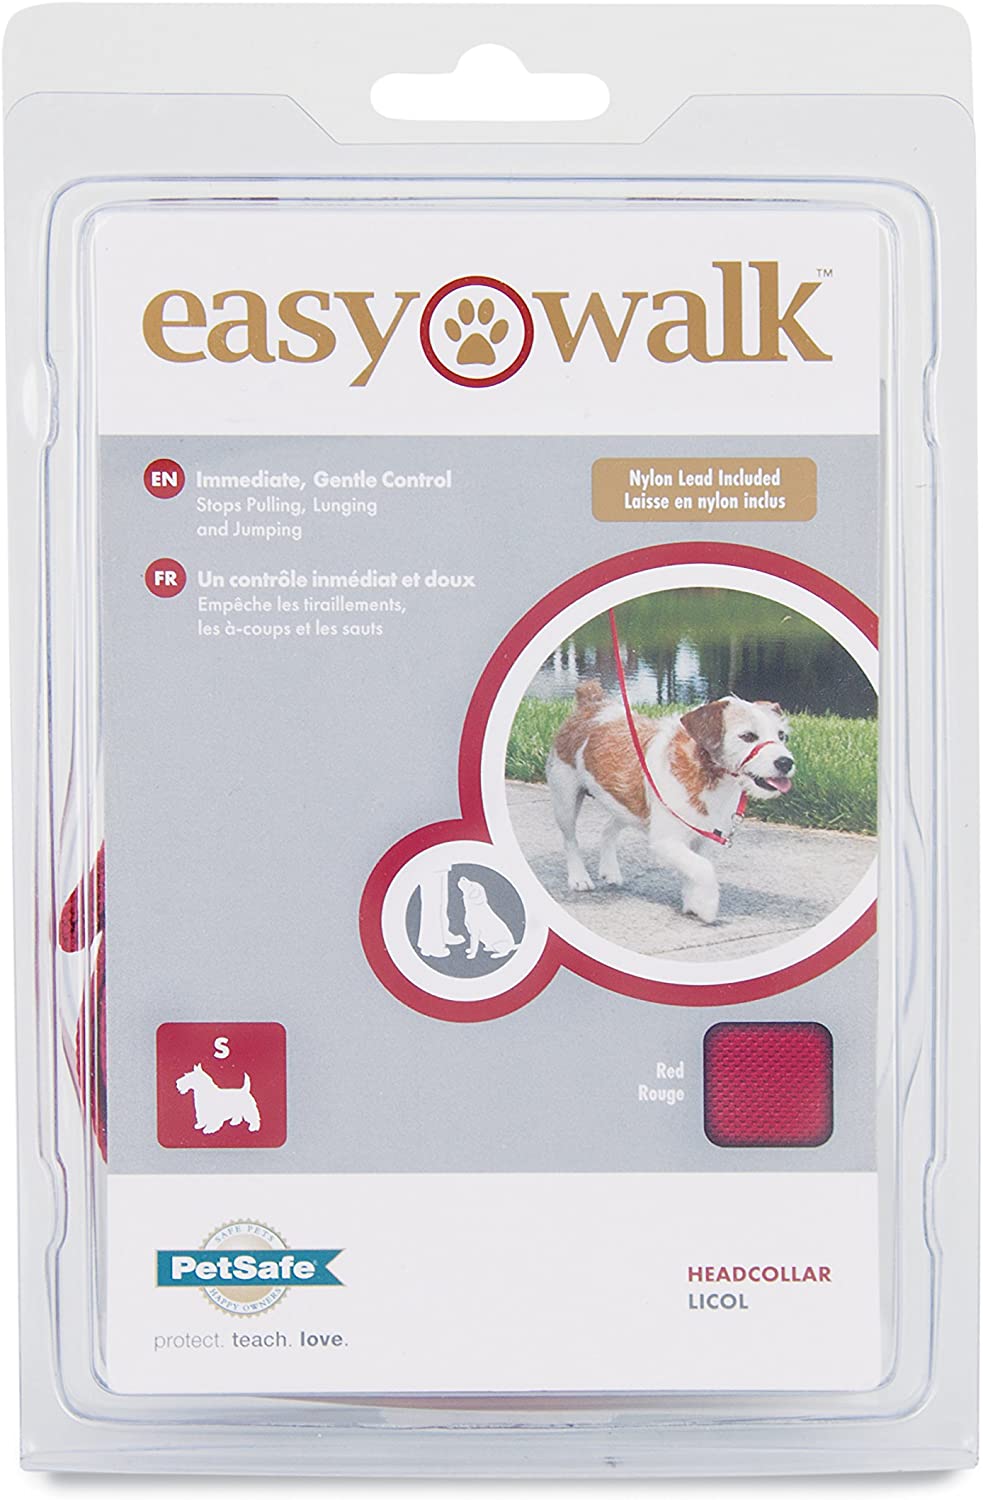  PetSafe Easy Walk cabezada 